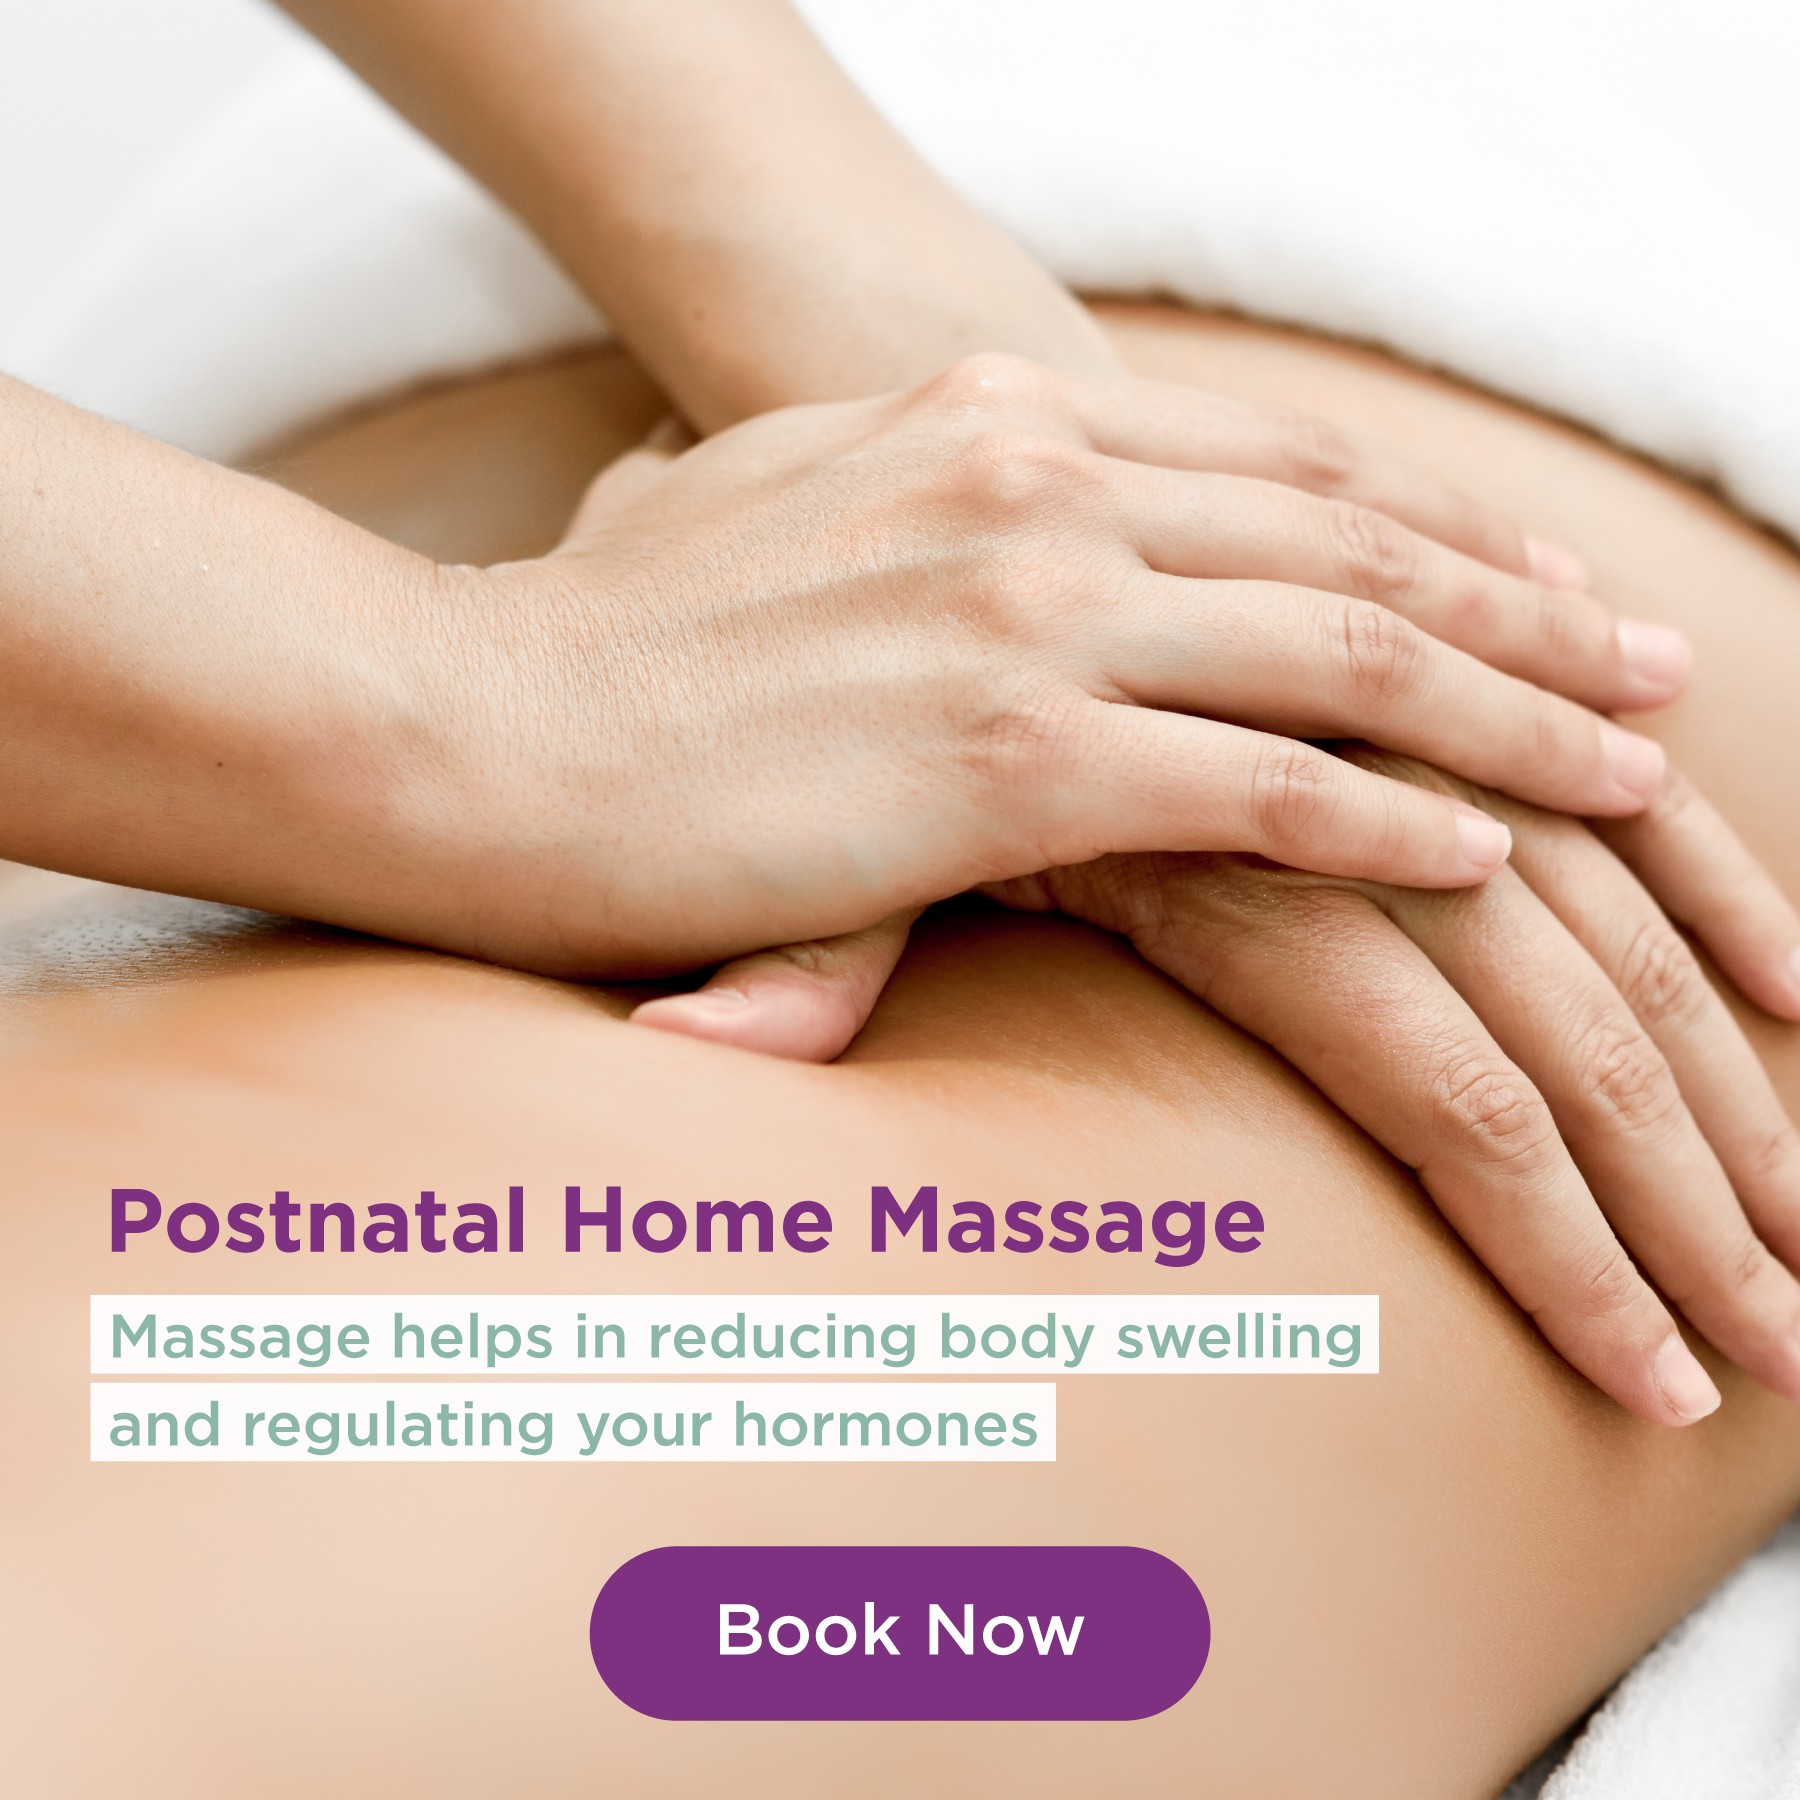 Postnatal Home Massage